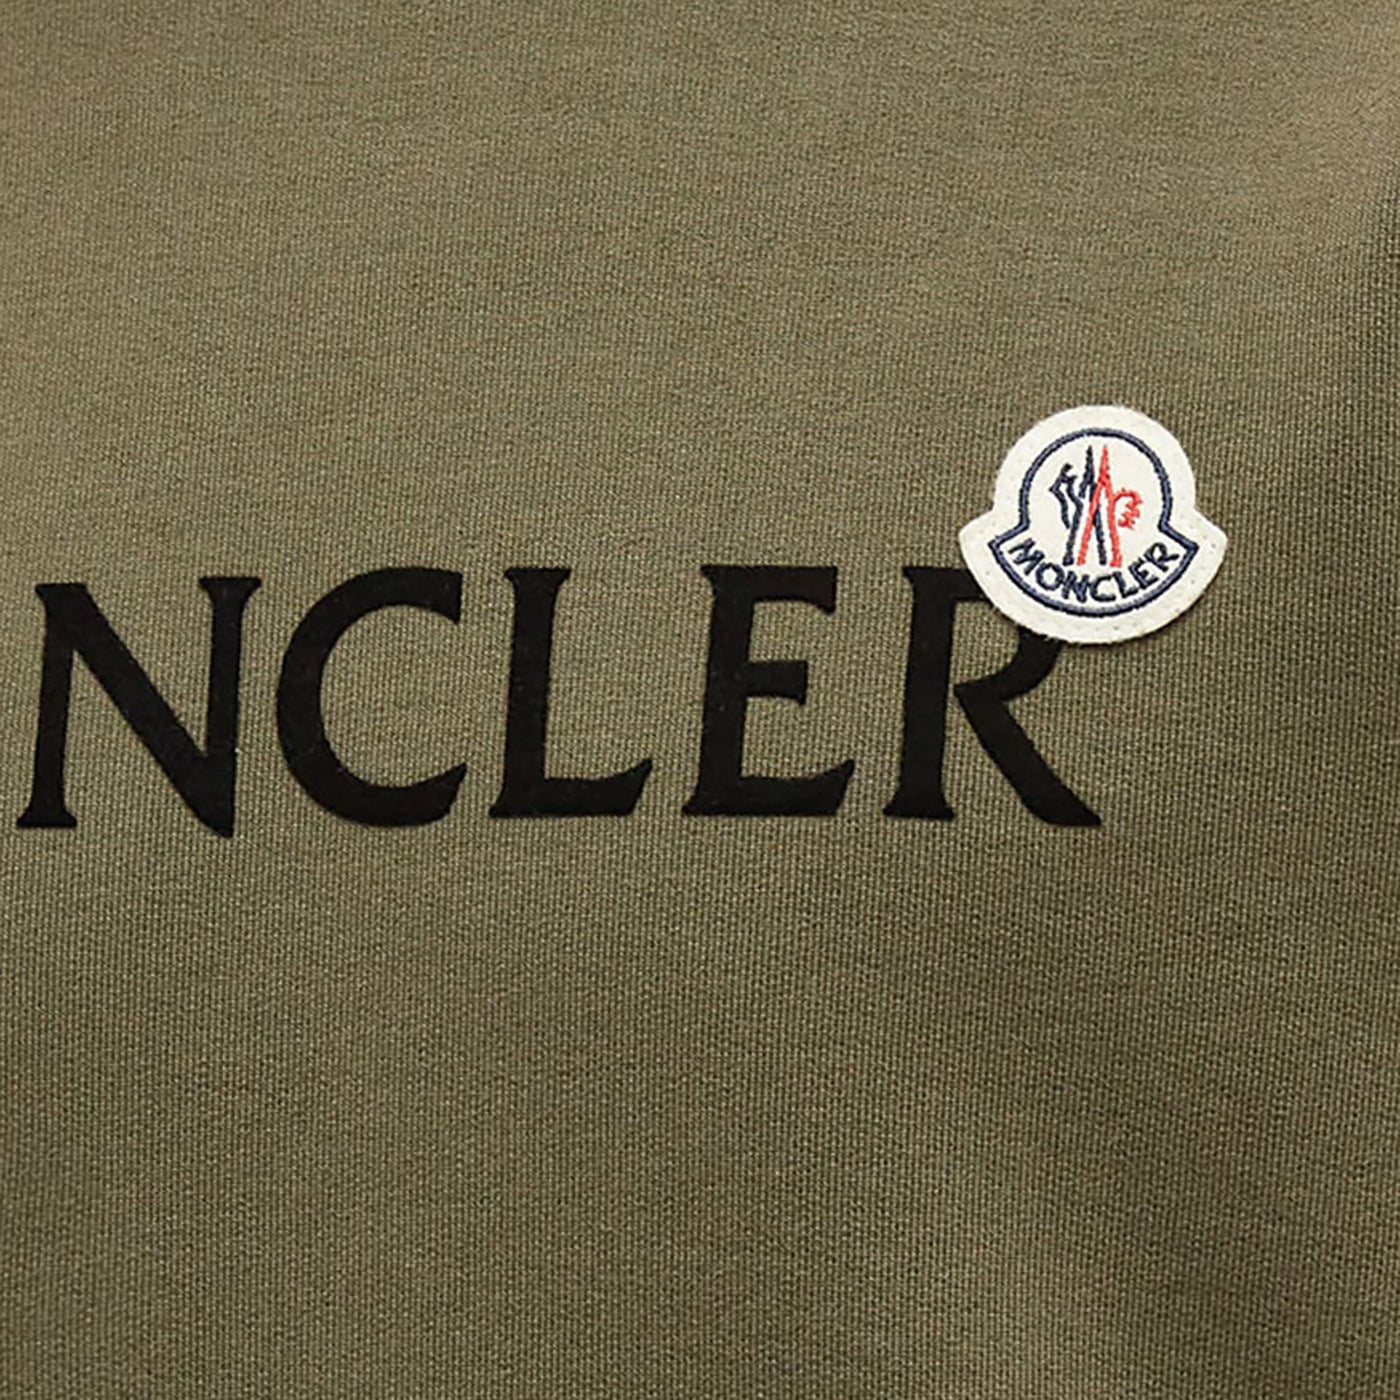 Moncler Logo Patch Sweatshirt